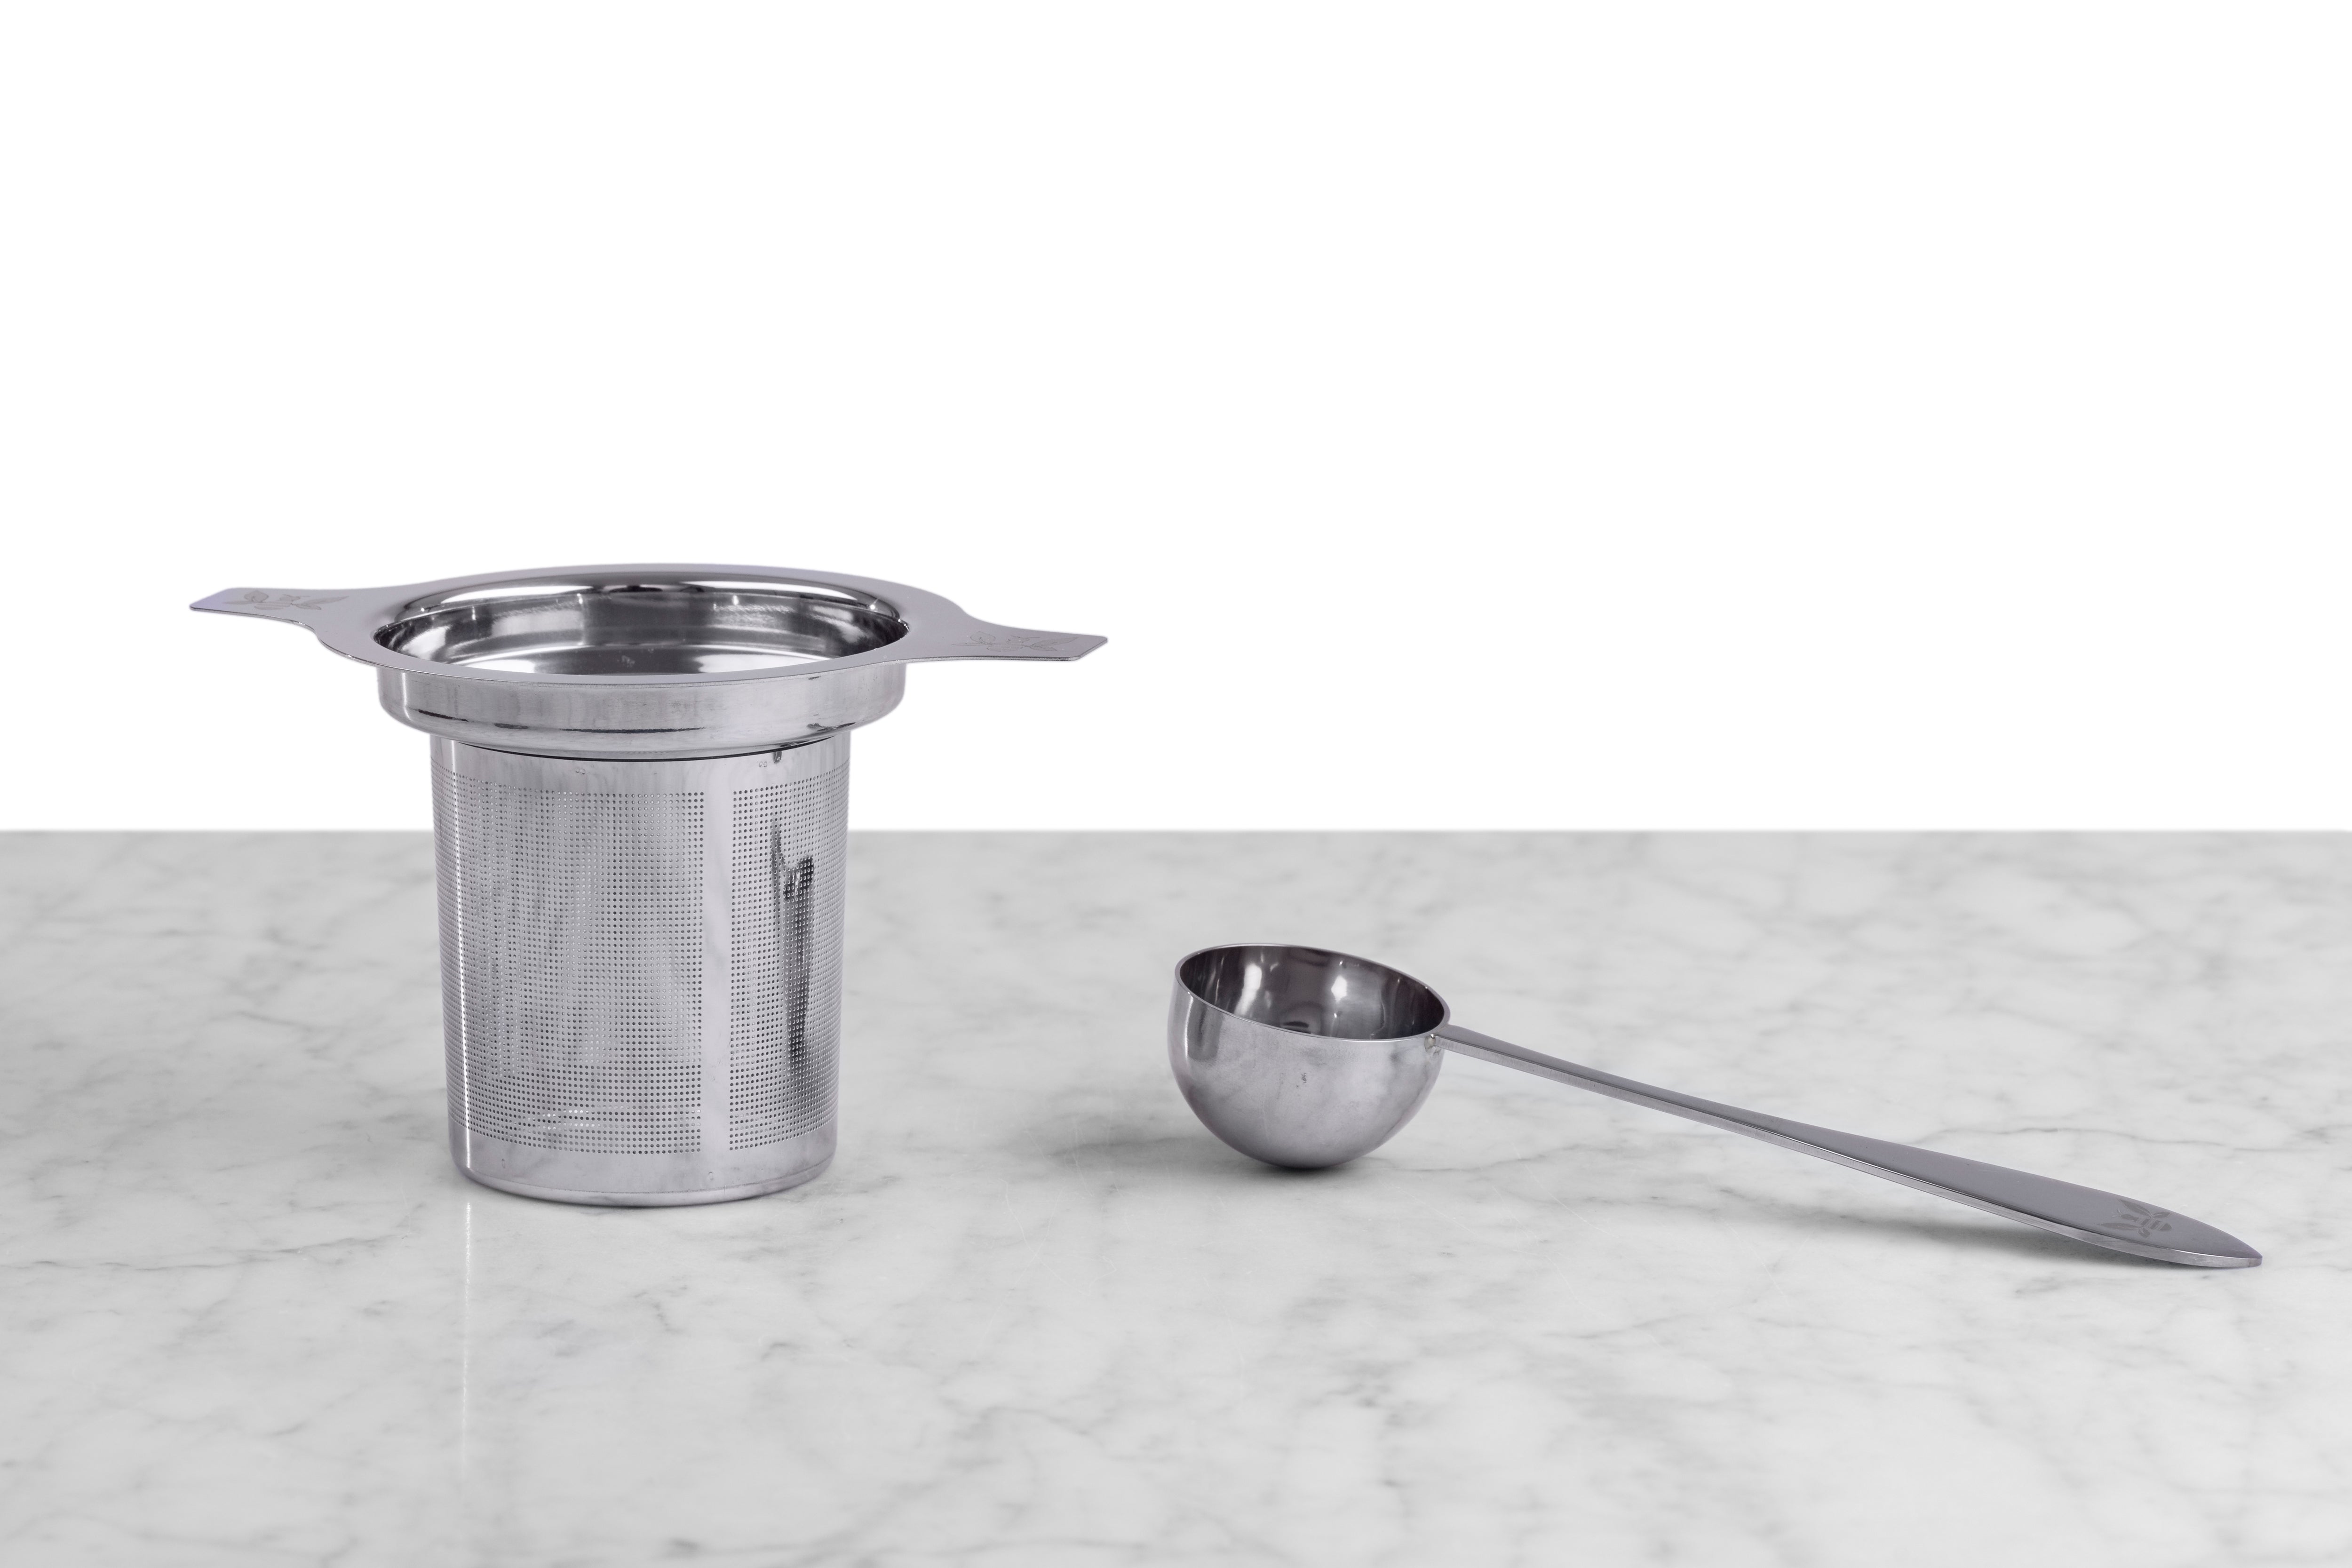 stainless steel tea infuser next to stainless steel tea scoop